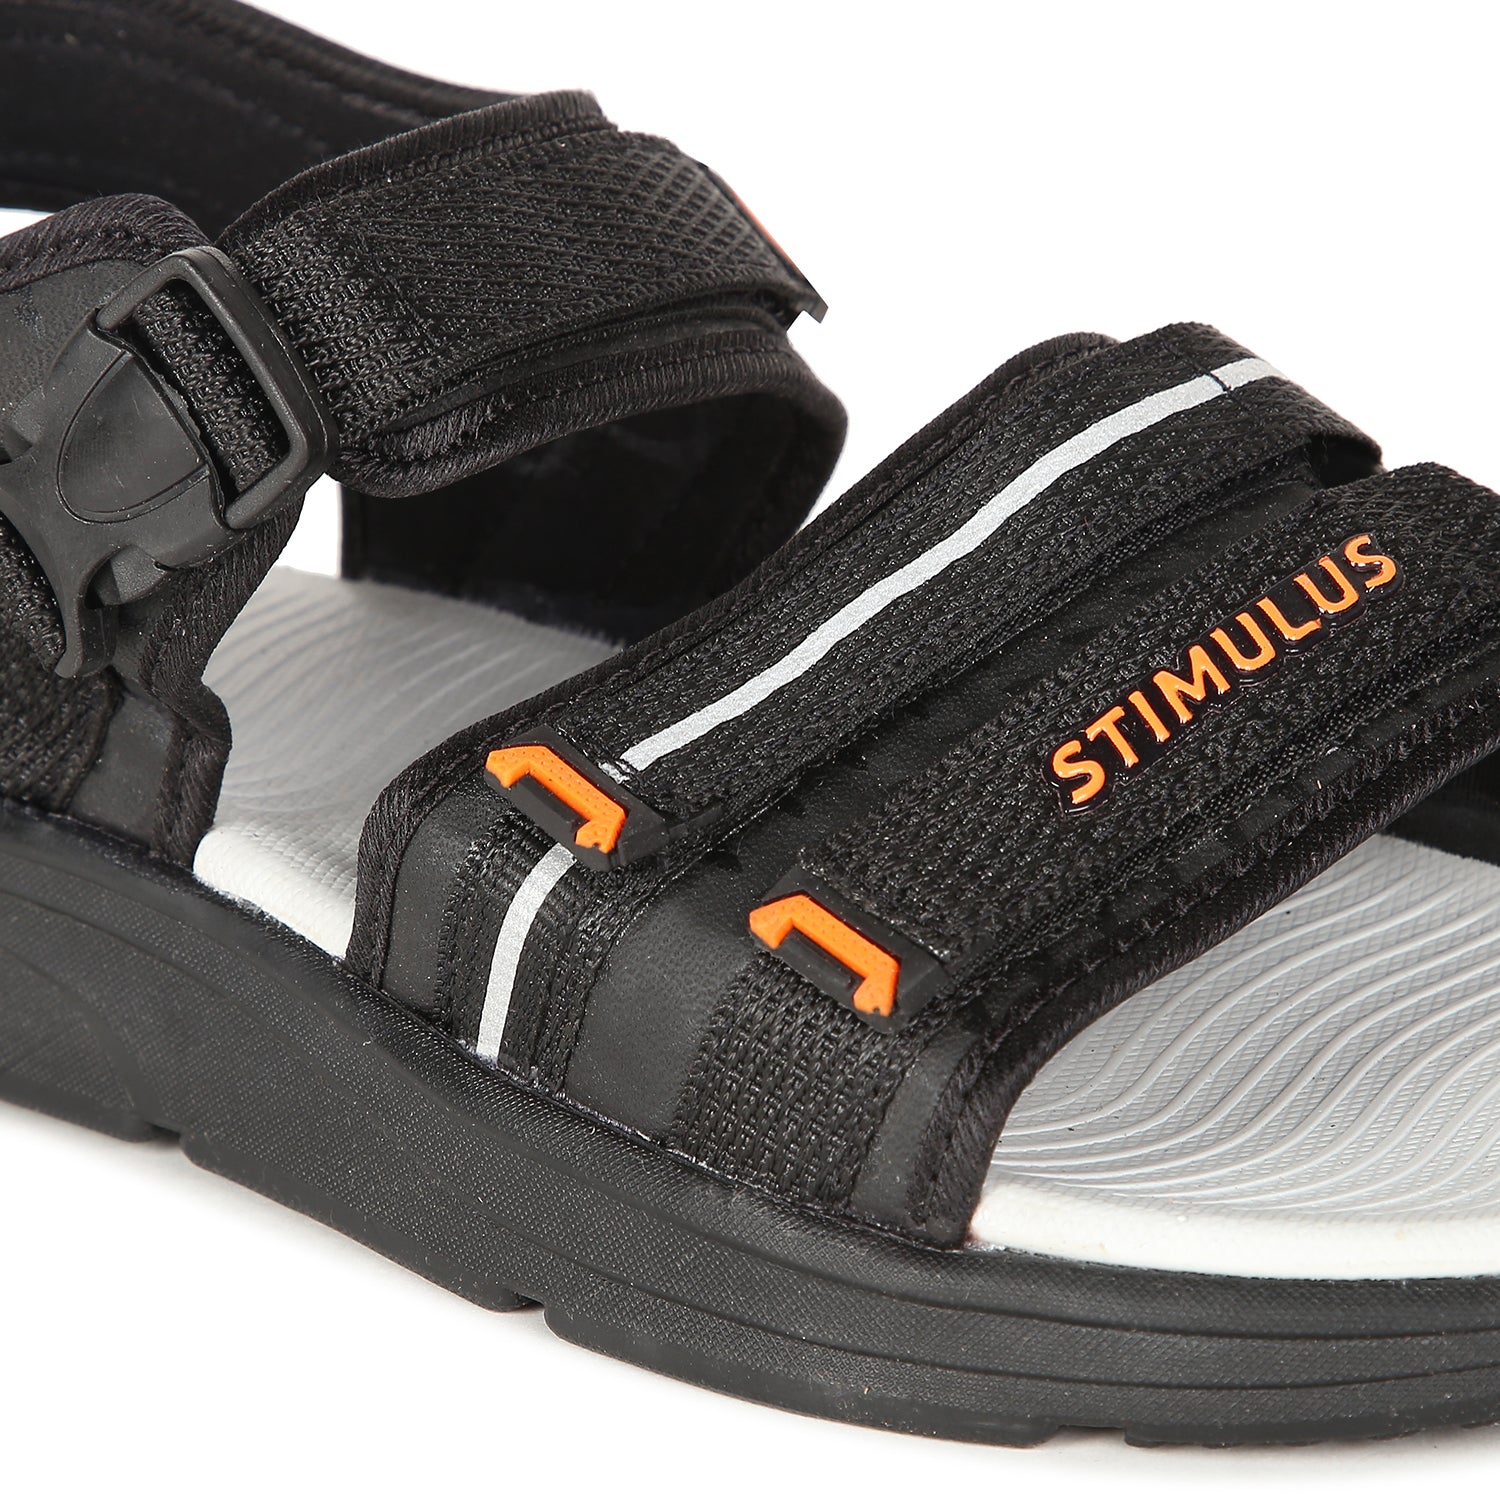 Stimulus FBSTG4004AP Black And Orange Stylish Lightweight Dailywear Sports Sandals For Men